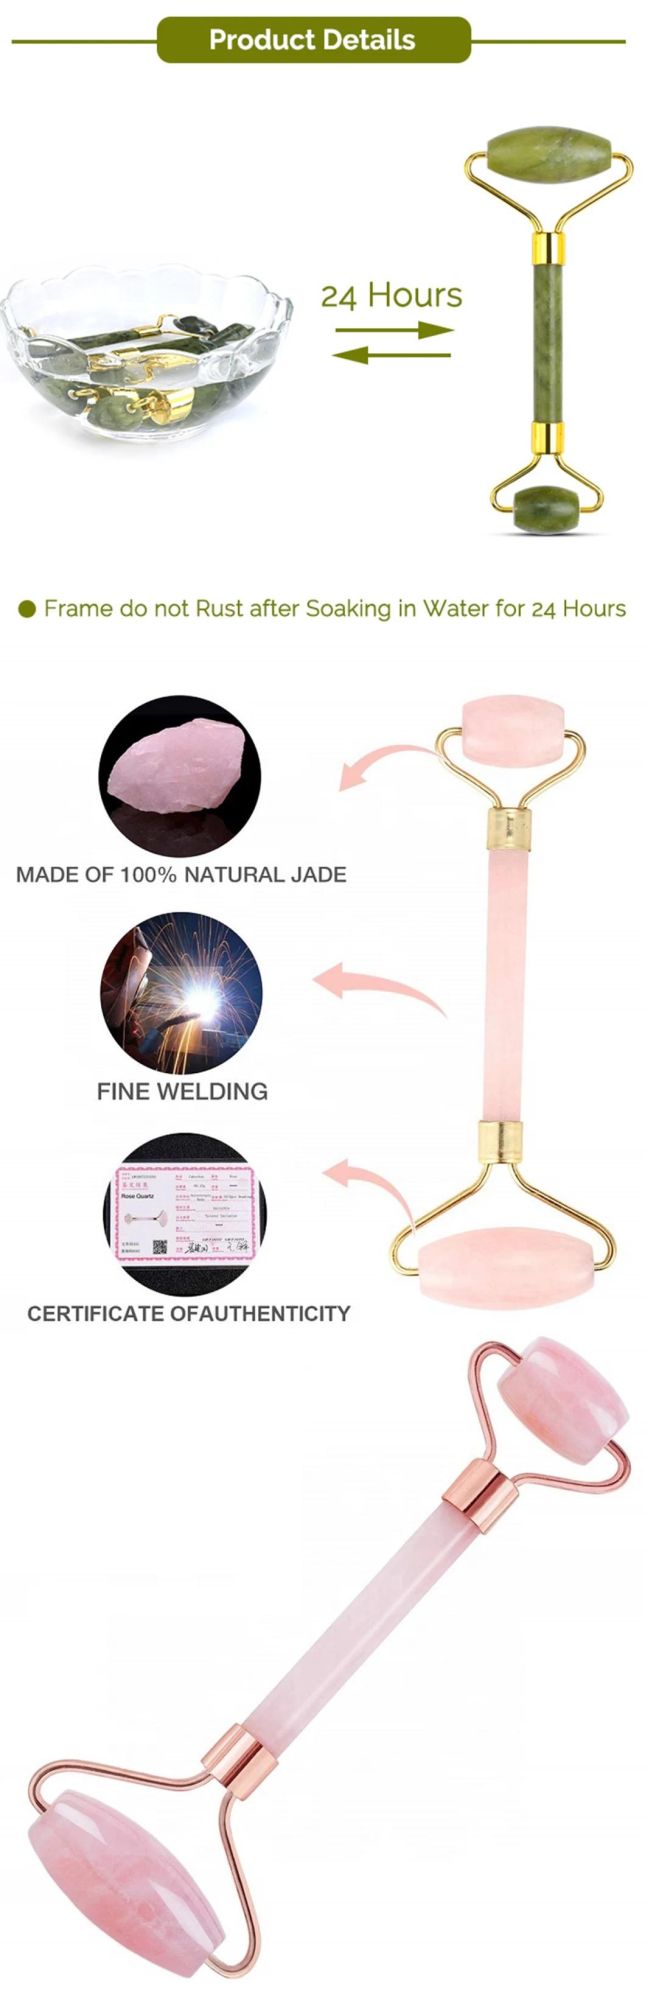 Best Price Hanhe Handheld Rose Quartz Jade Roller Gua Sha Beauty Facial Massage Rose Jade Roller for Face with Box